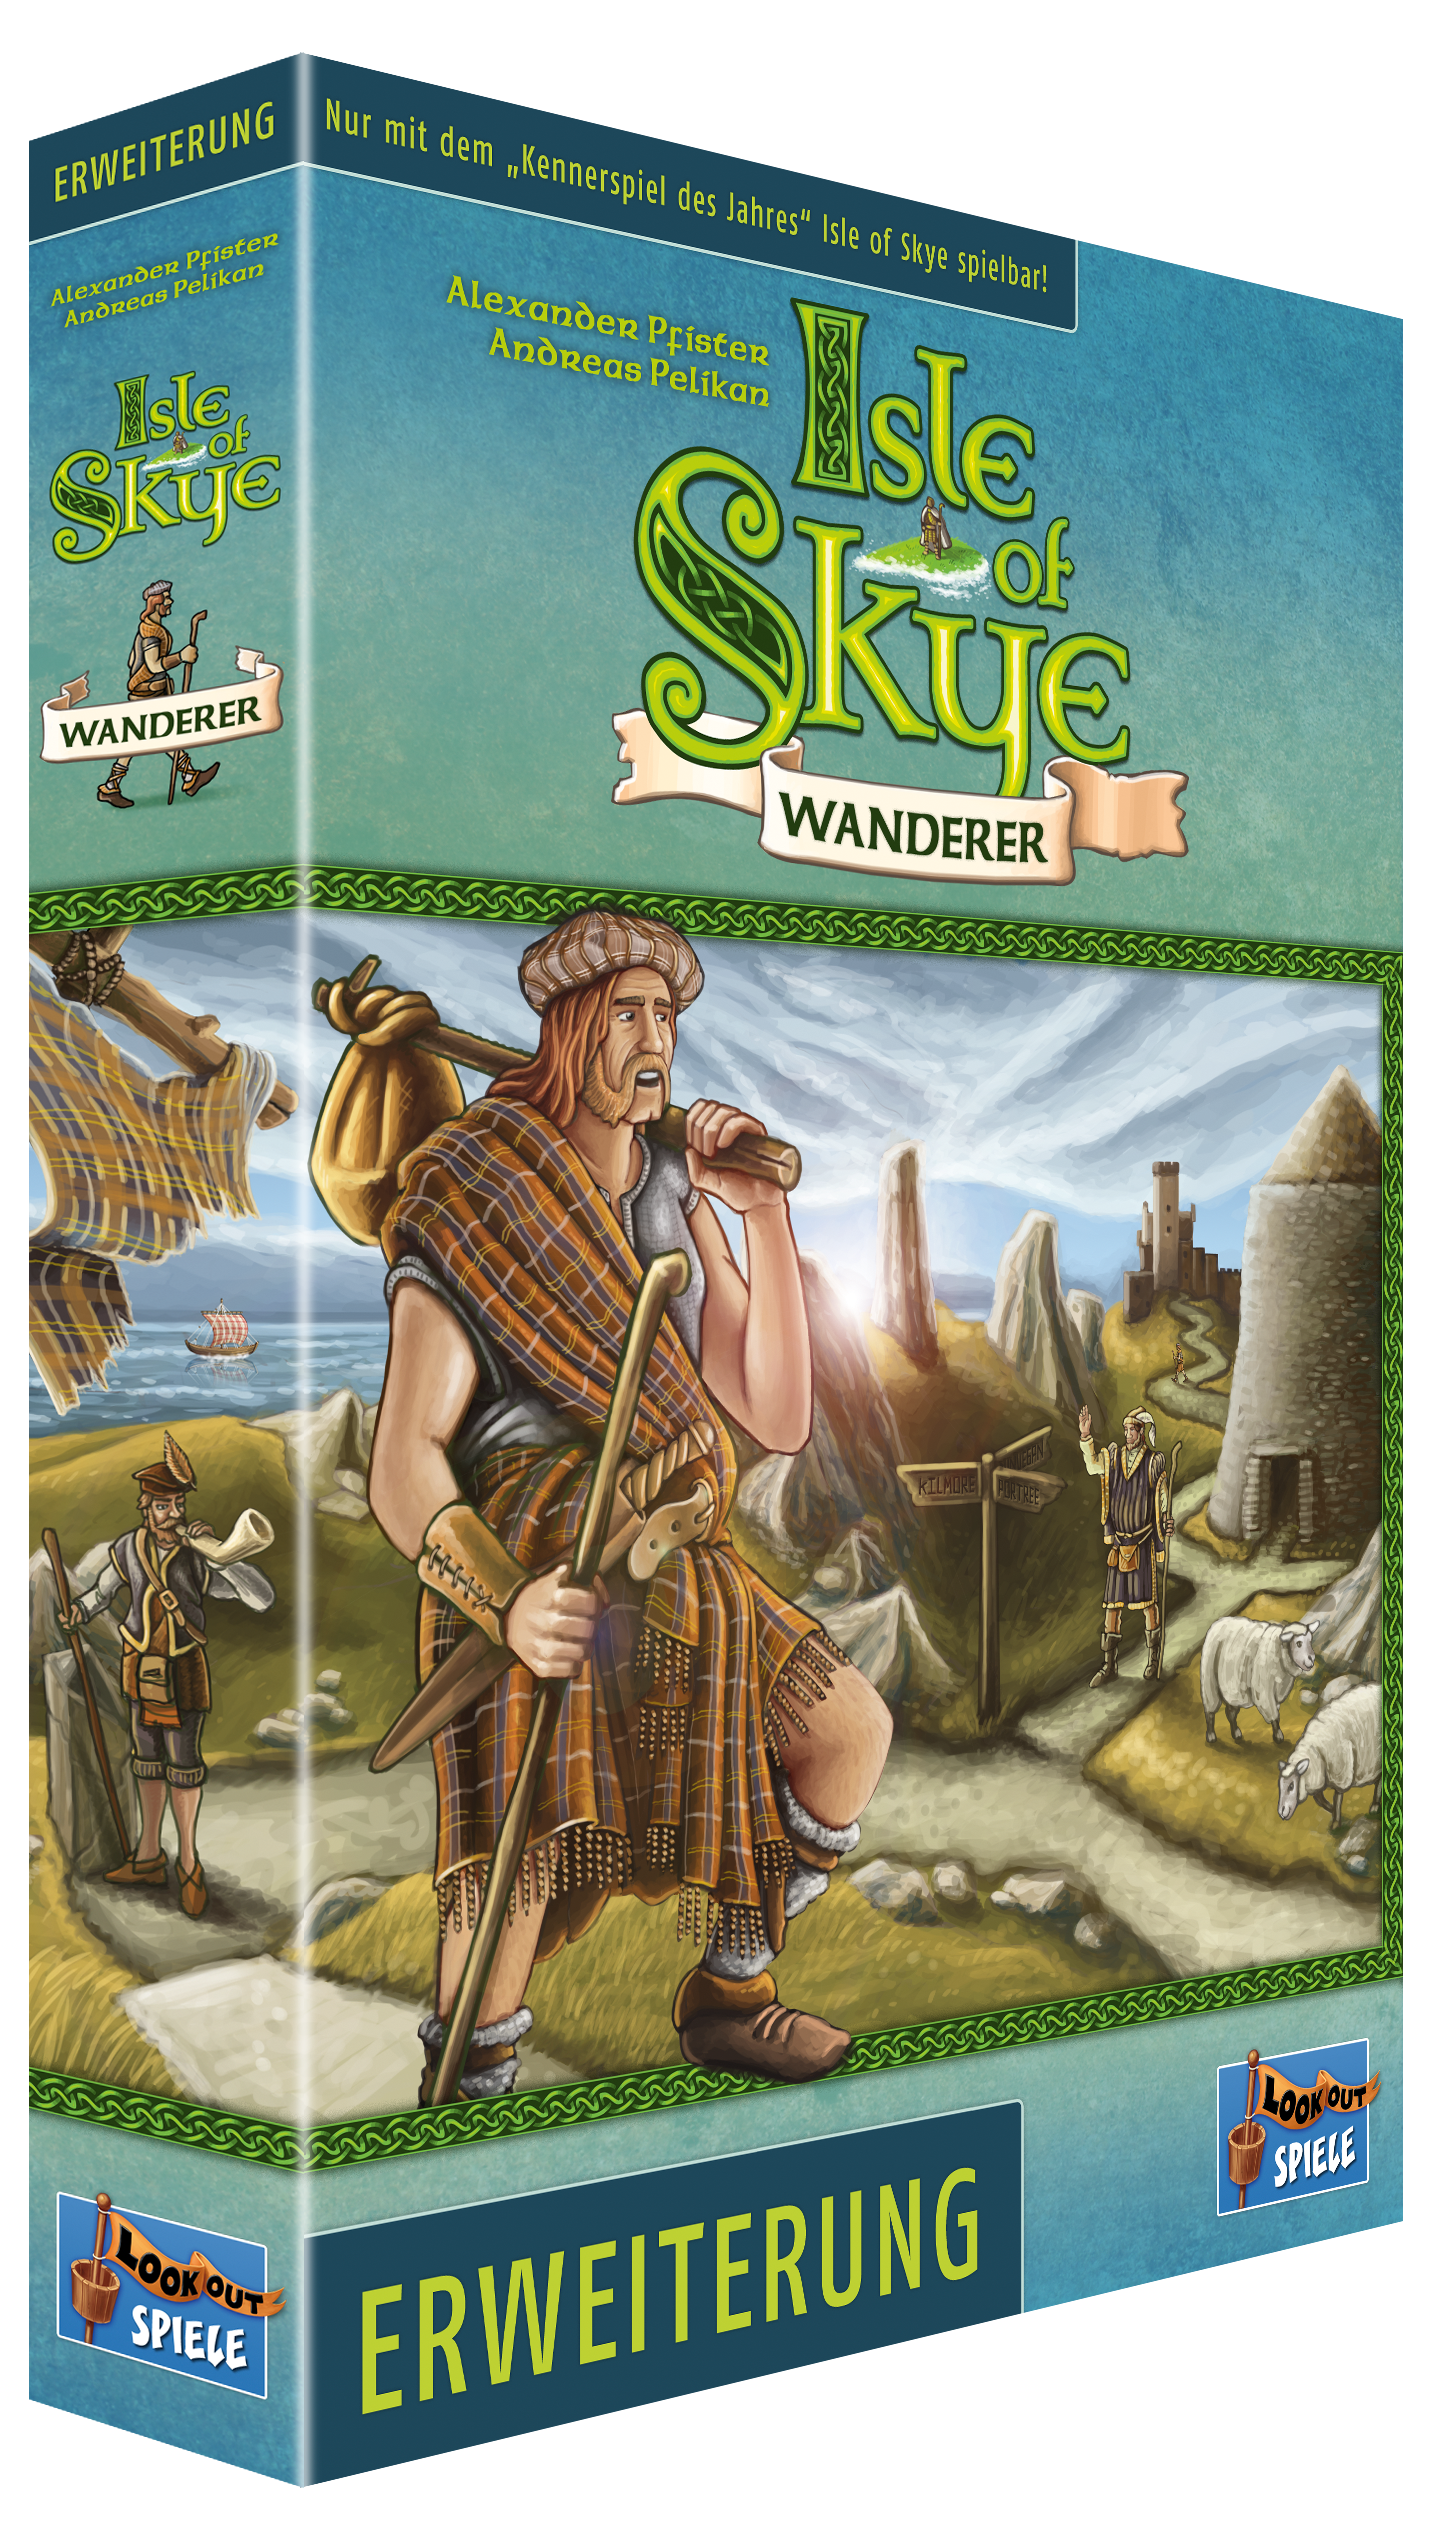 Isle Of Skye Spiel Kaufen